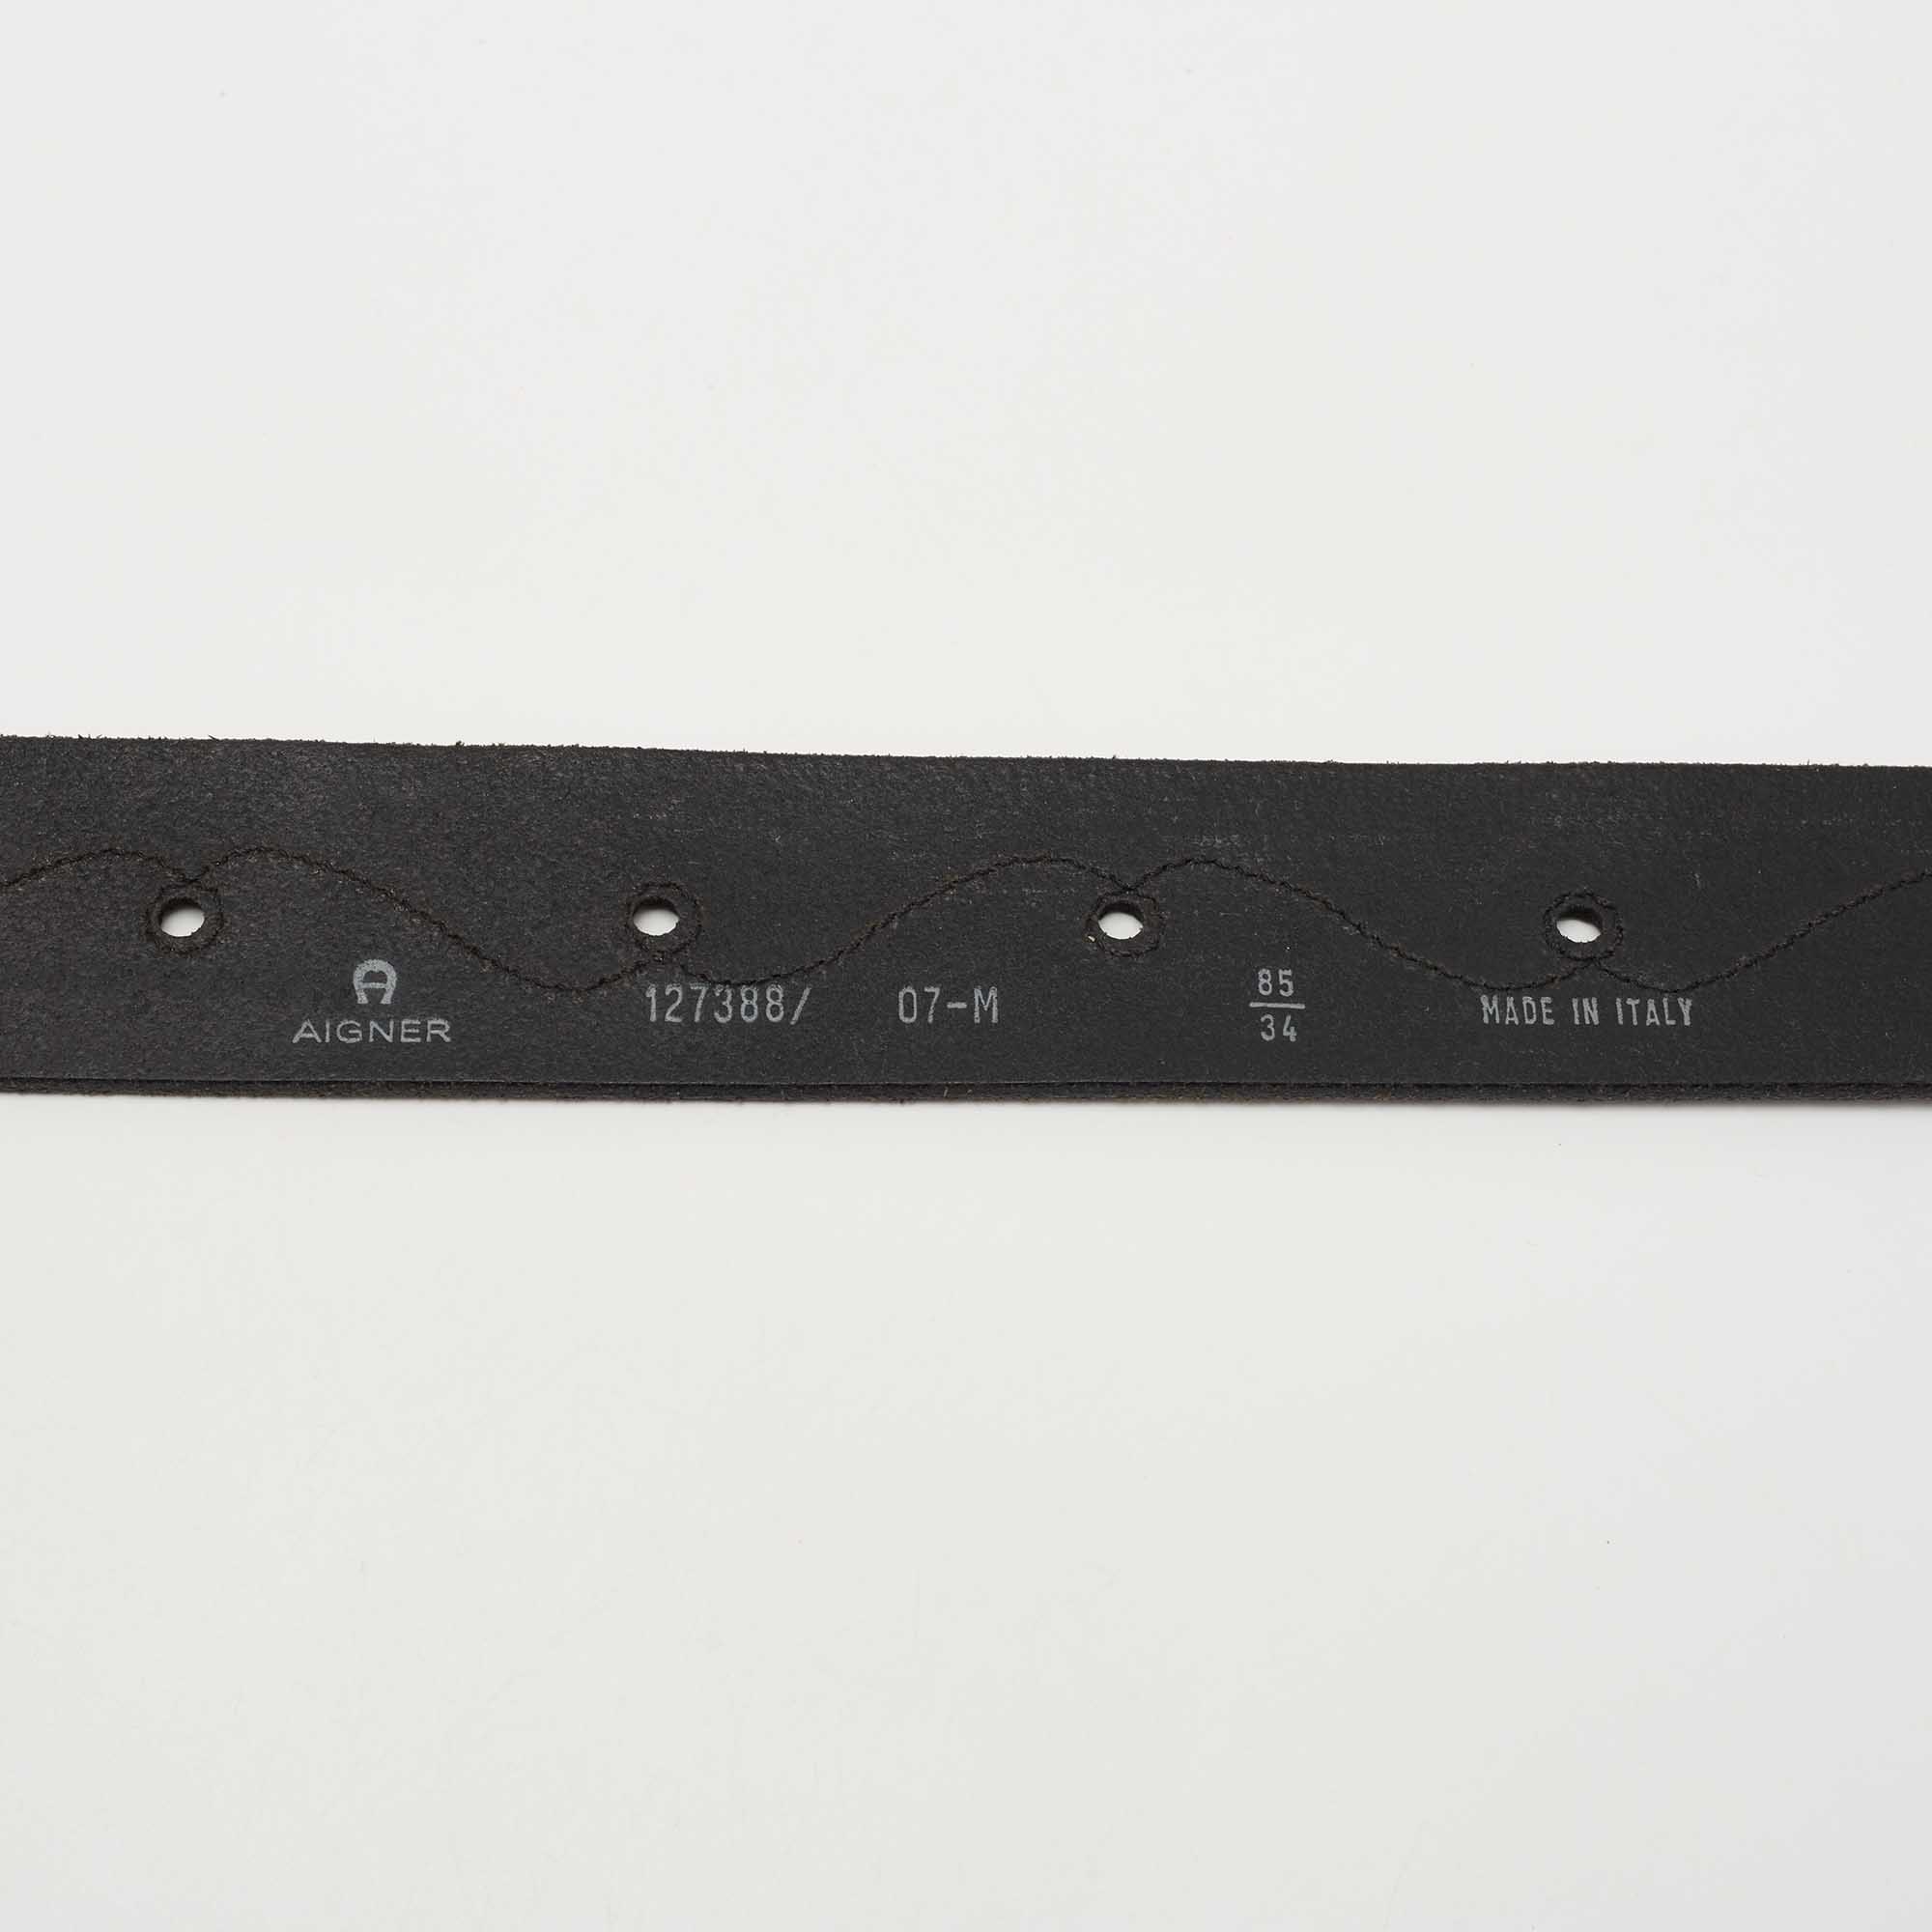 Aigner Black Leather Whipstitch Buckle Belt 85 CM